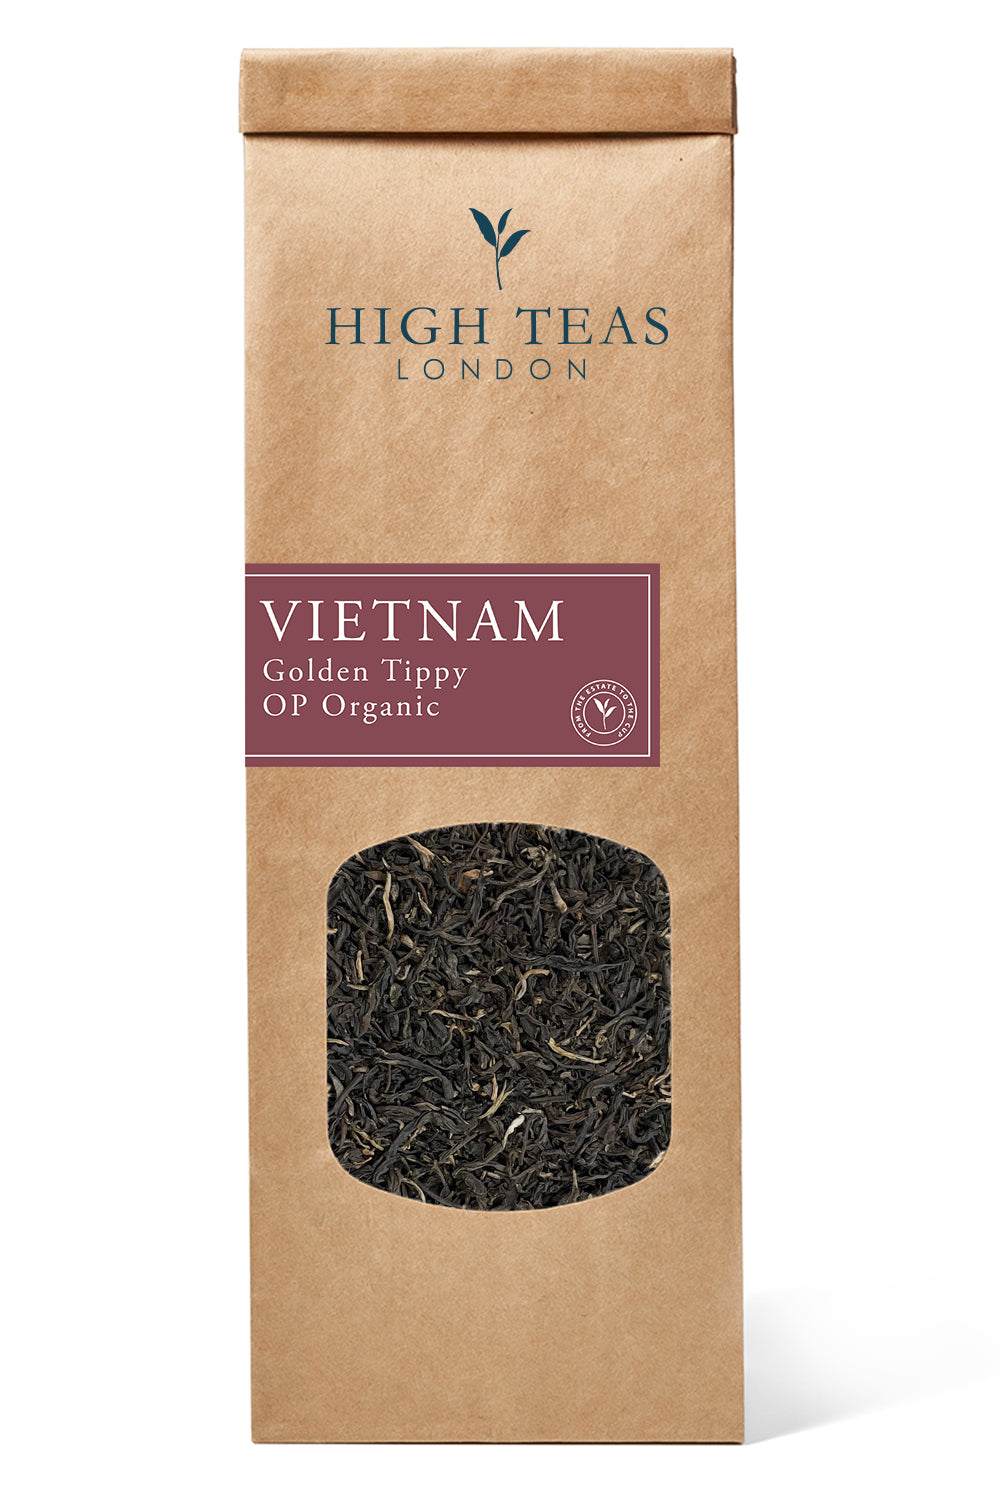 Vietnam Golden Tippy OP Organic-50 grams-Loose Leaf Tea-High Teas